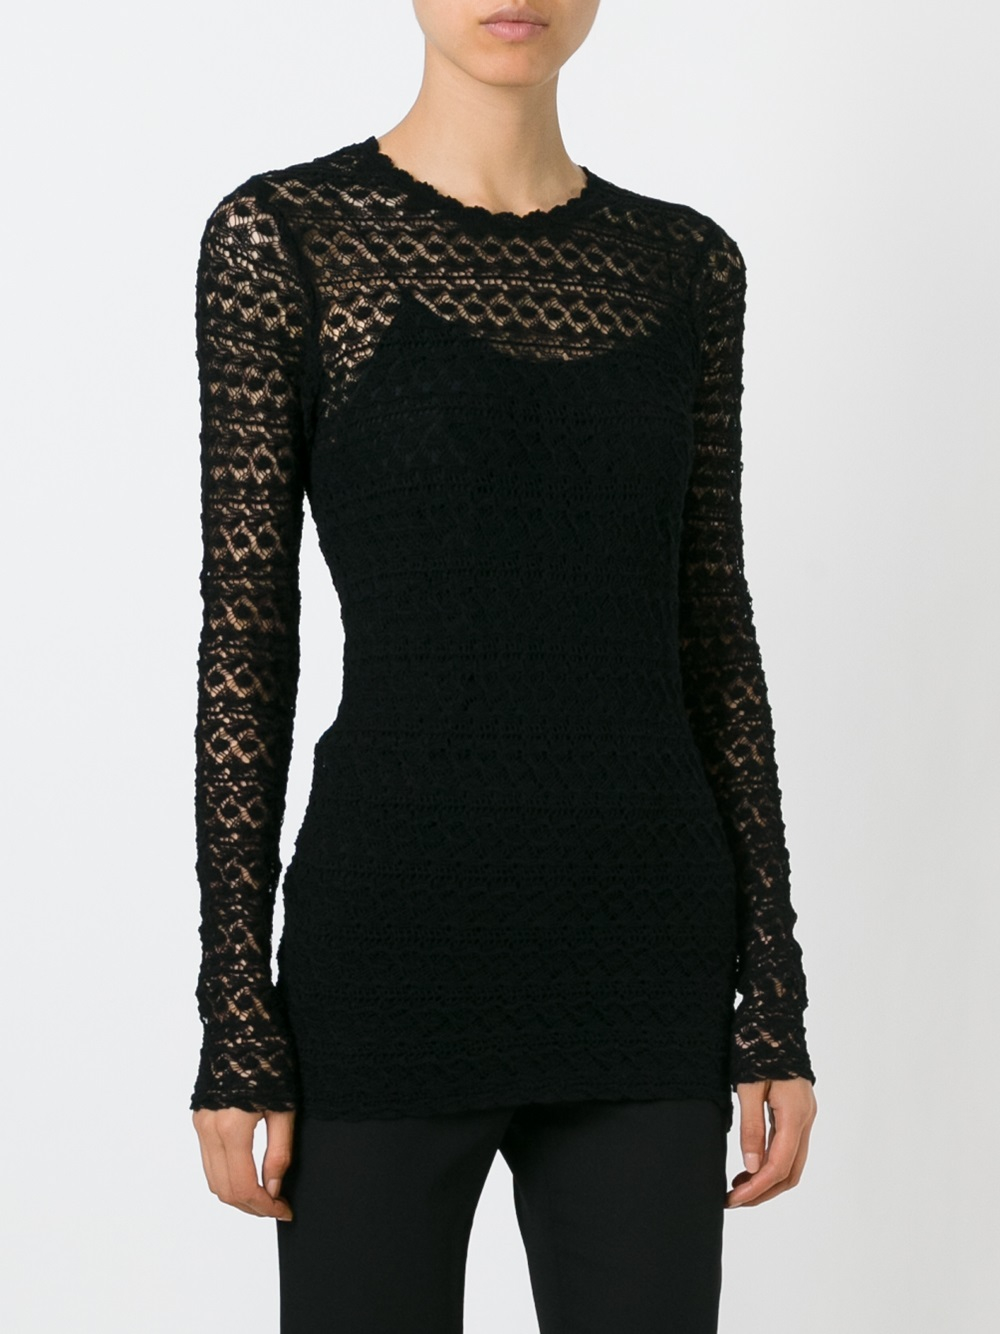 Lyst - Isabel Marant Dulcie Cotton Crochet Sweater in Black